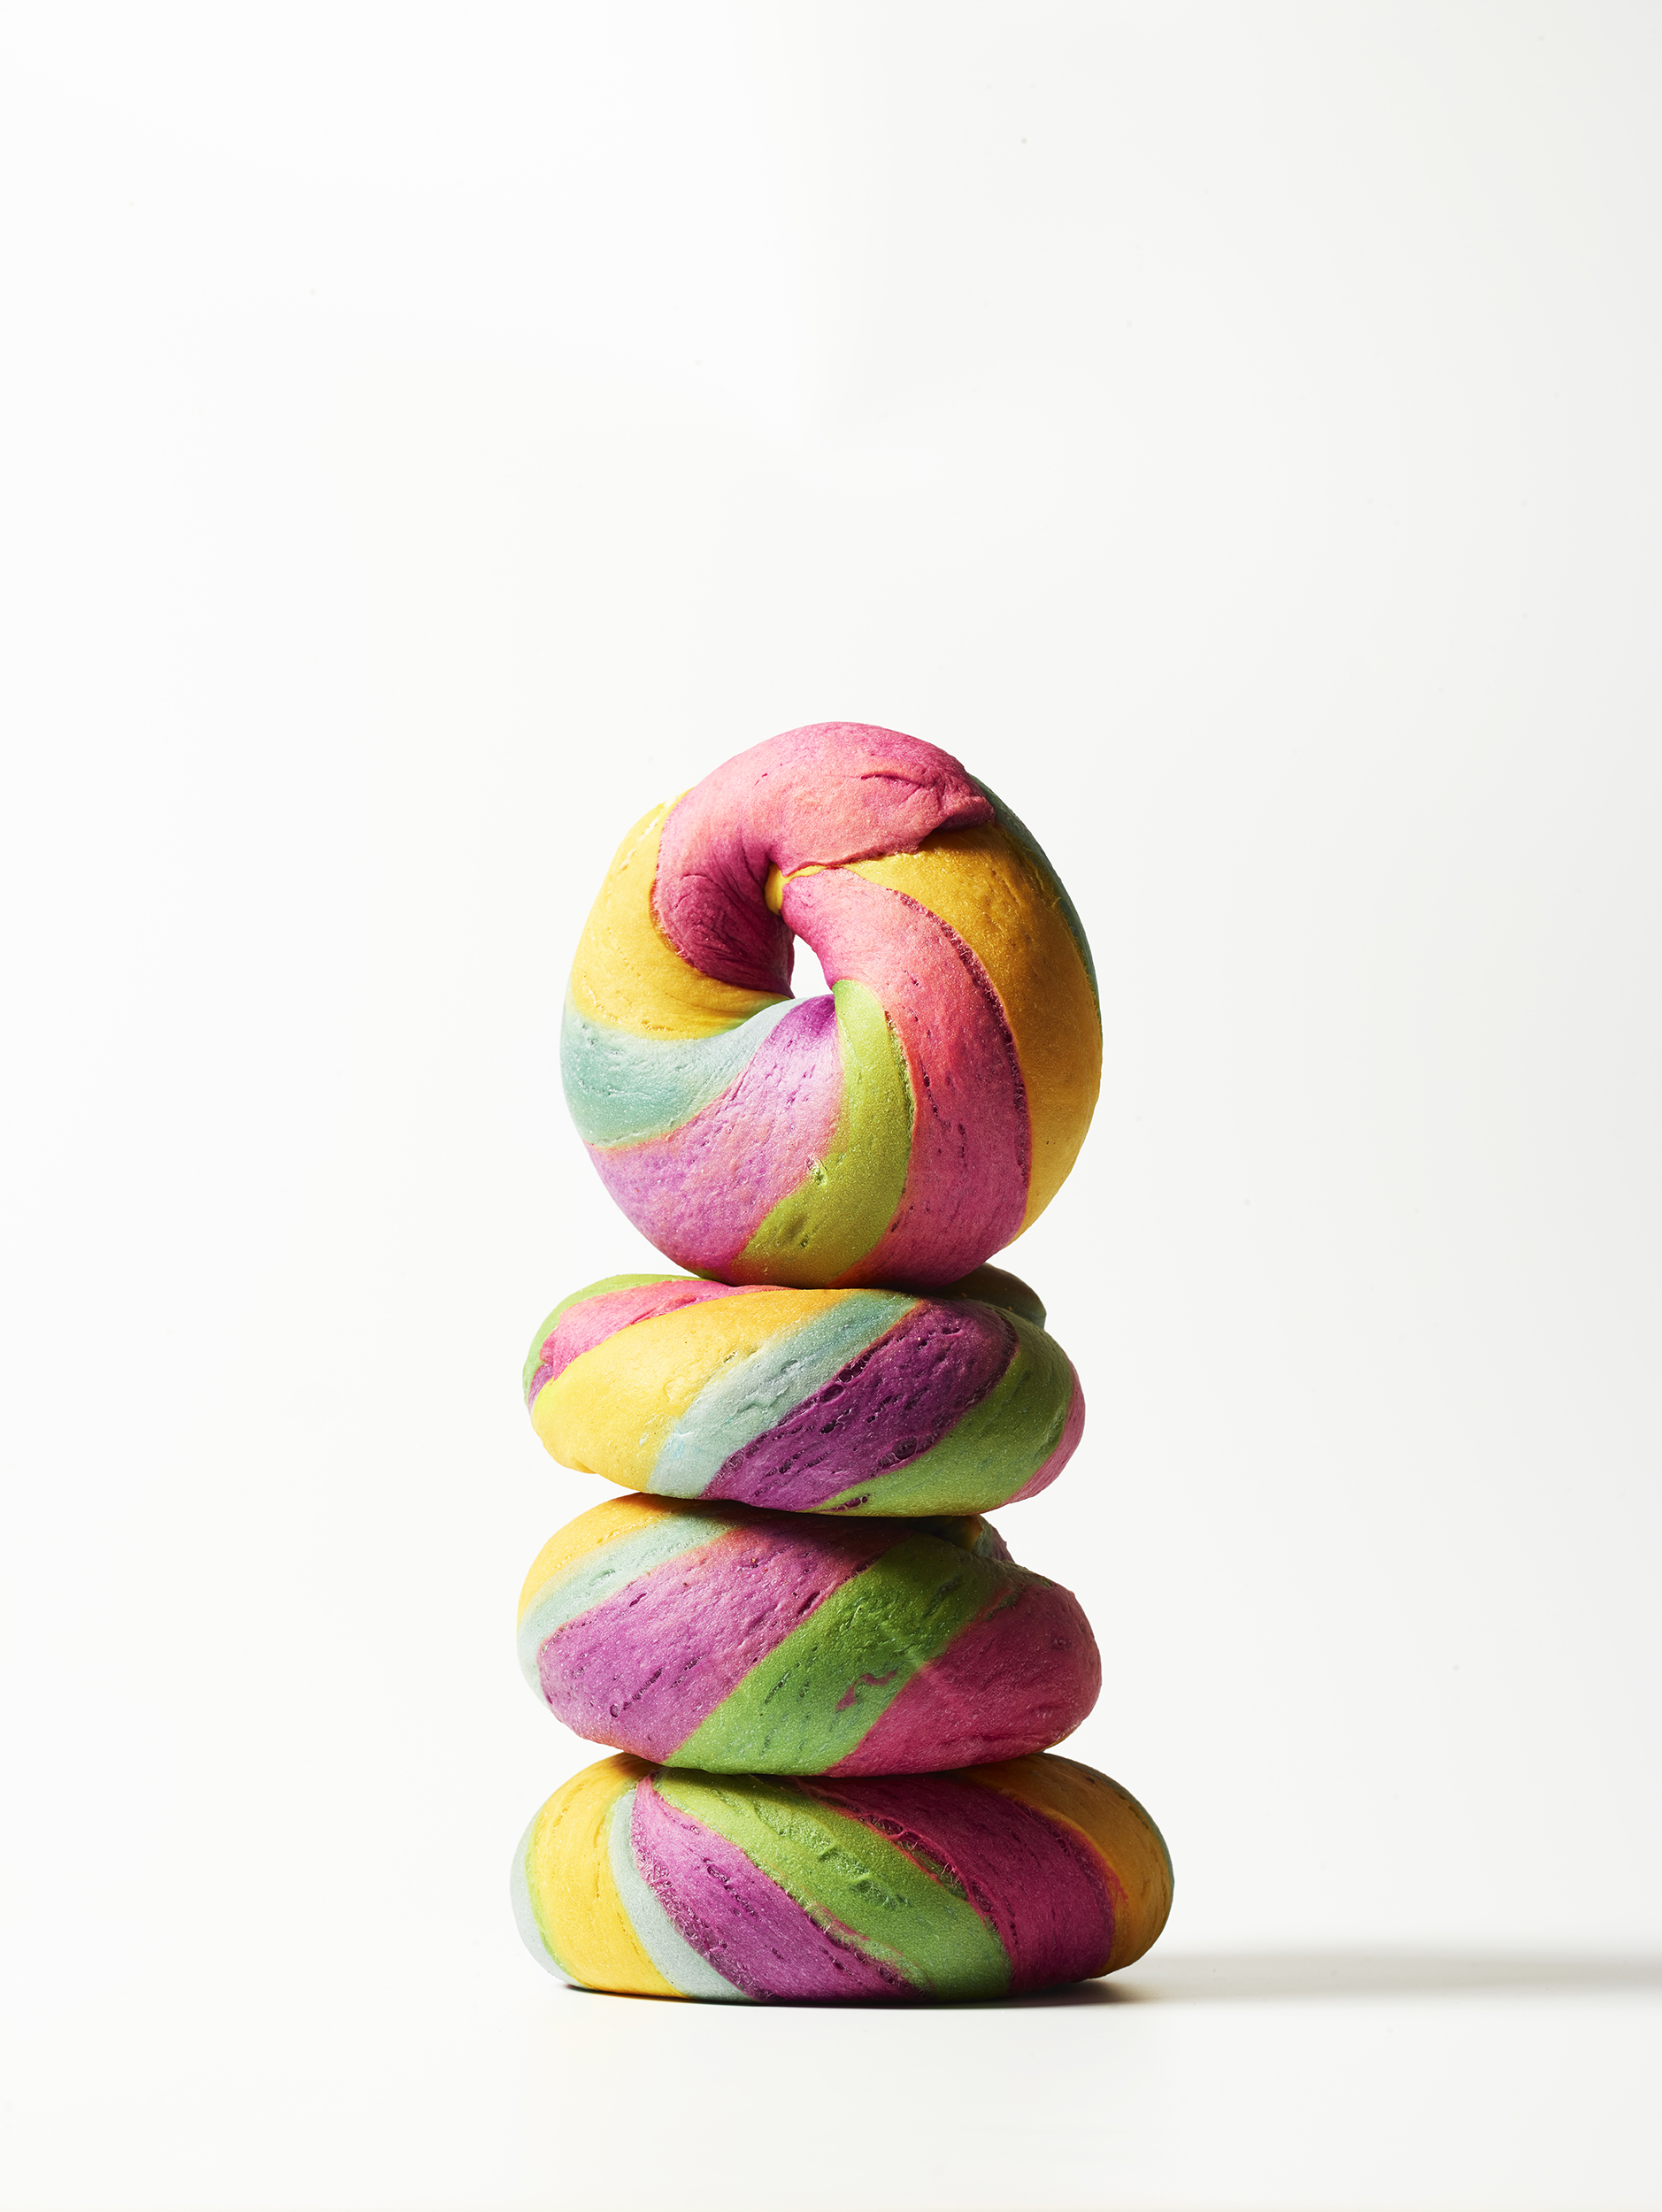 Chelsea Bloxsome | Food Photographer London rainbow bagel